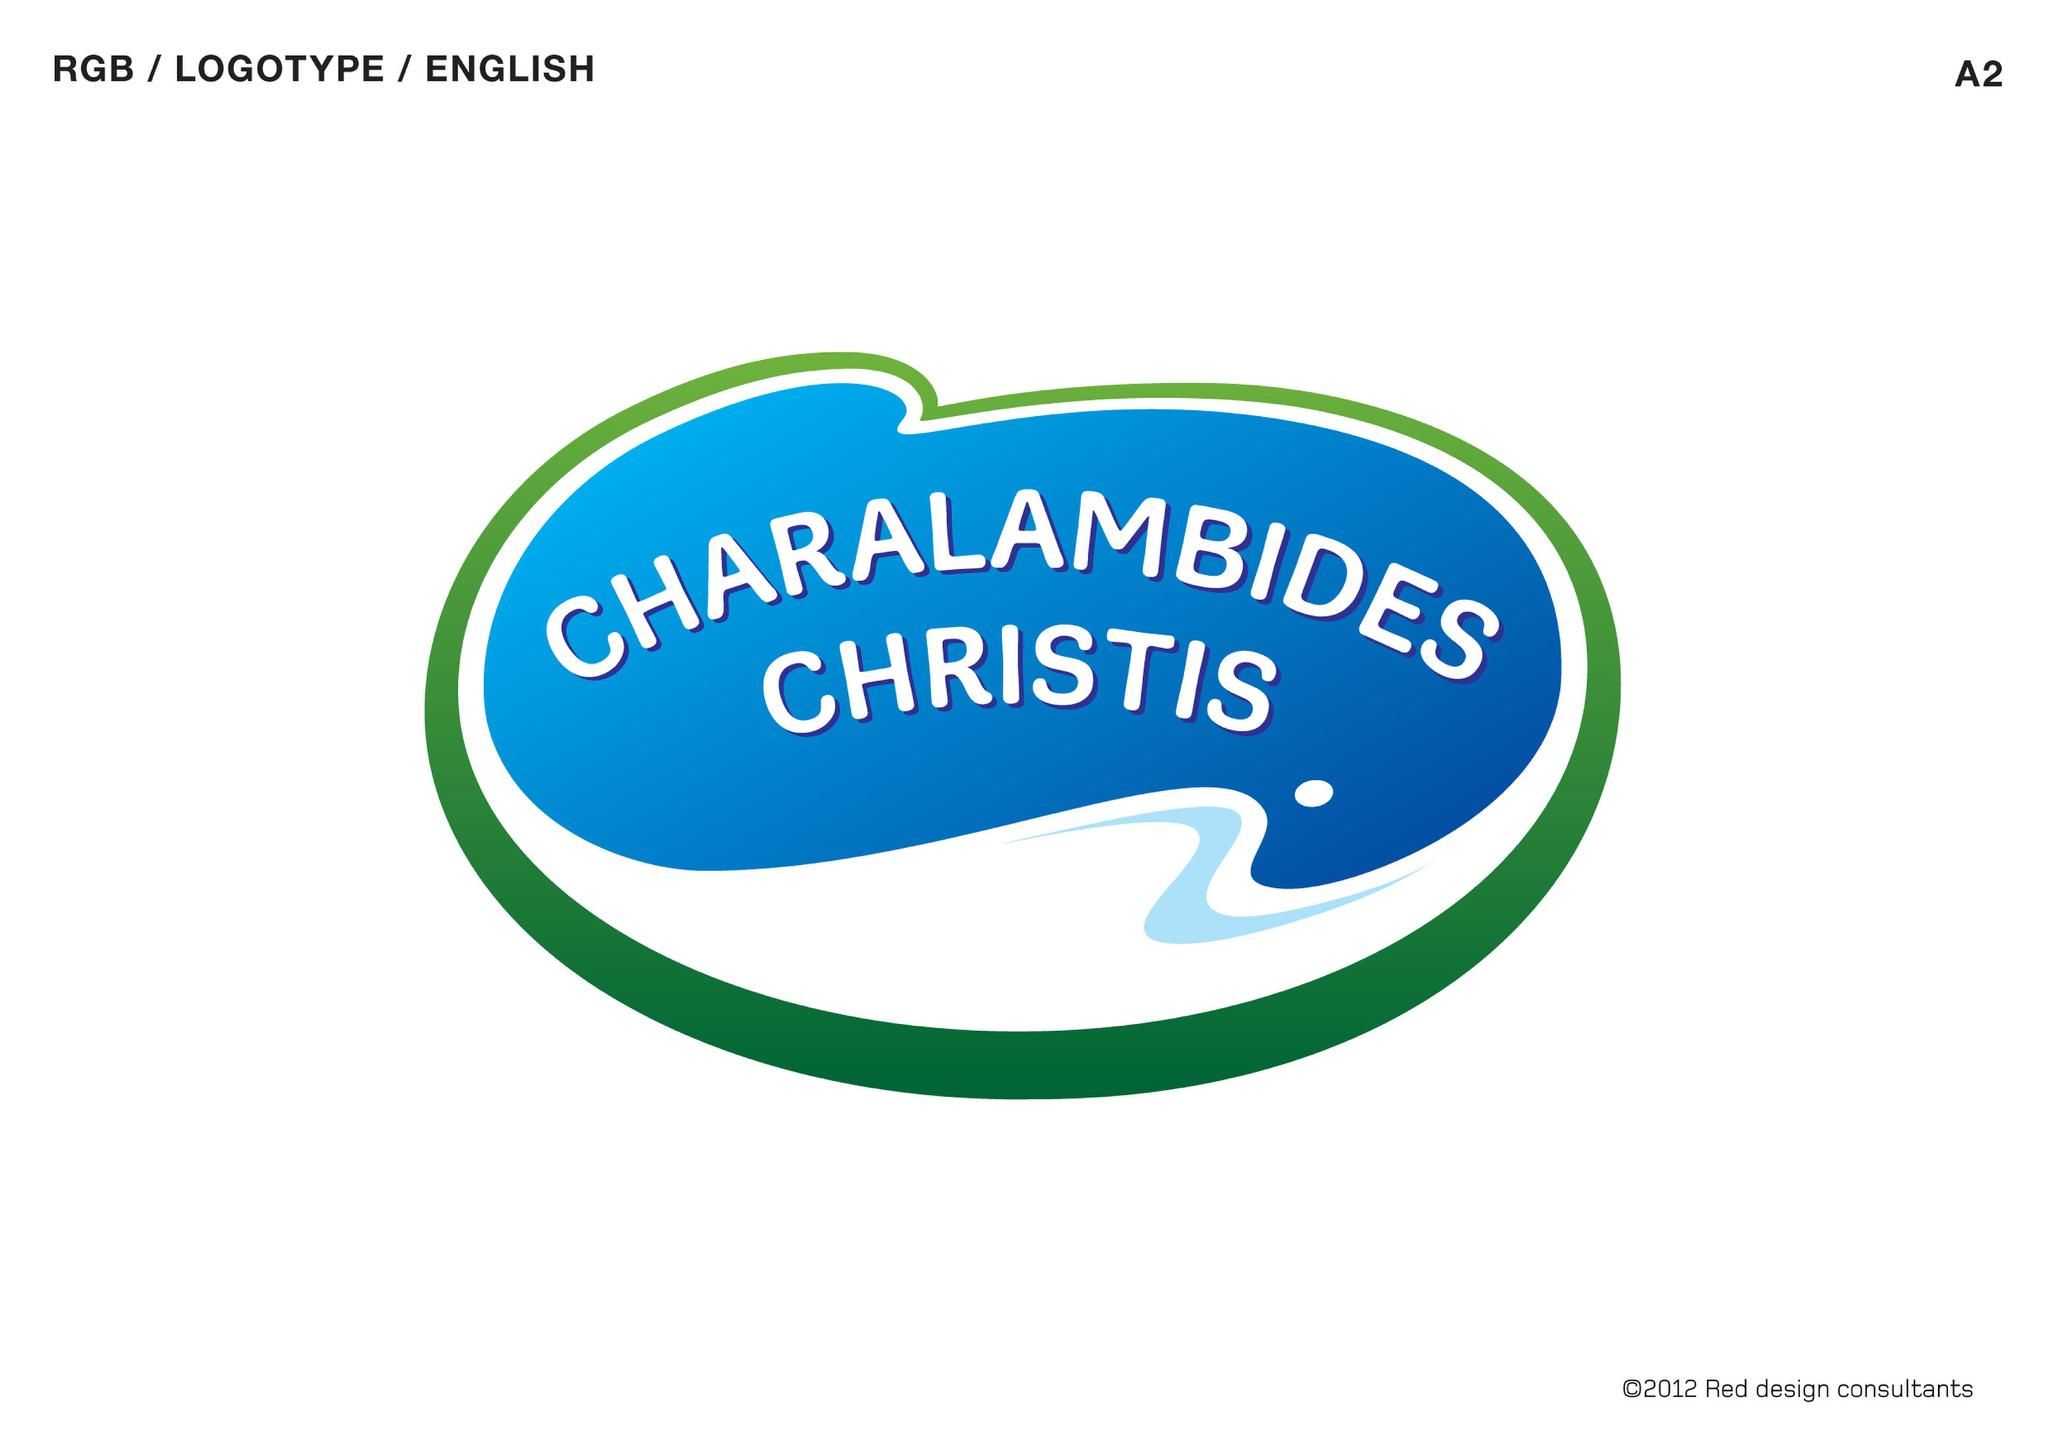 Charalambides Christsis Ltd